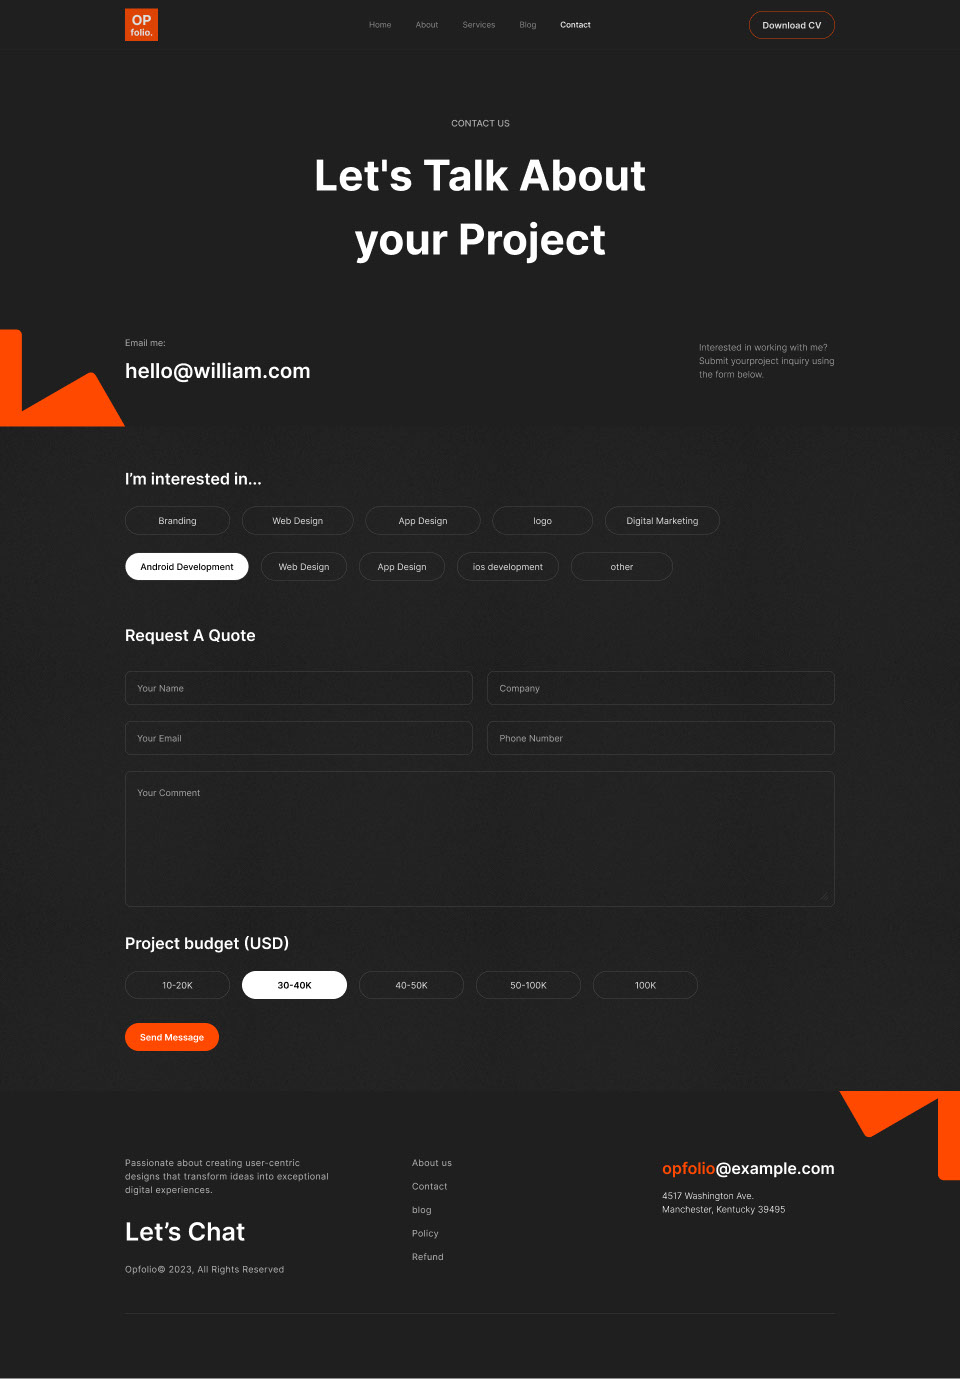 Personal Portfolio Landing Page UI Design rendition image